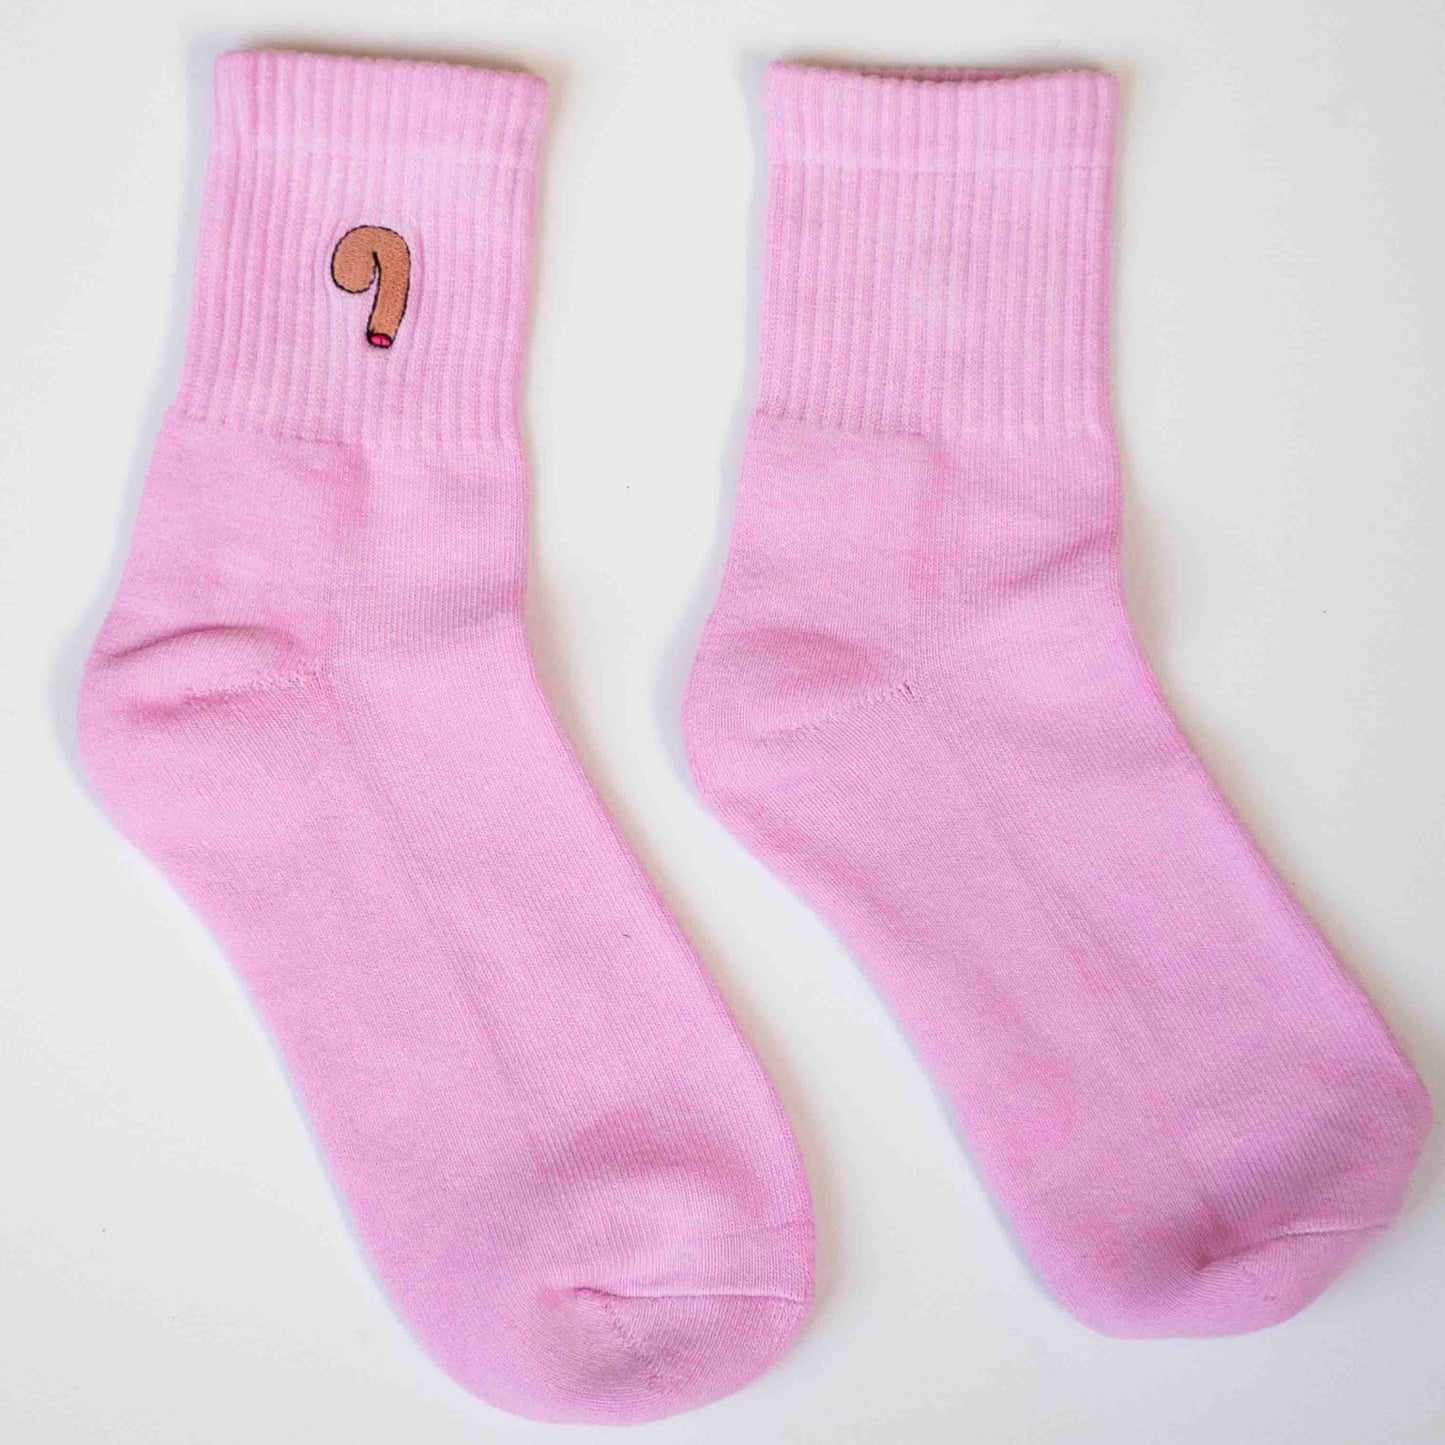 Cocks On Socks - Pink Socks w/Brown Logo